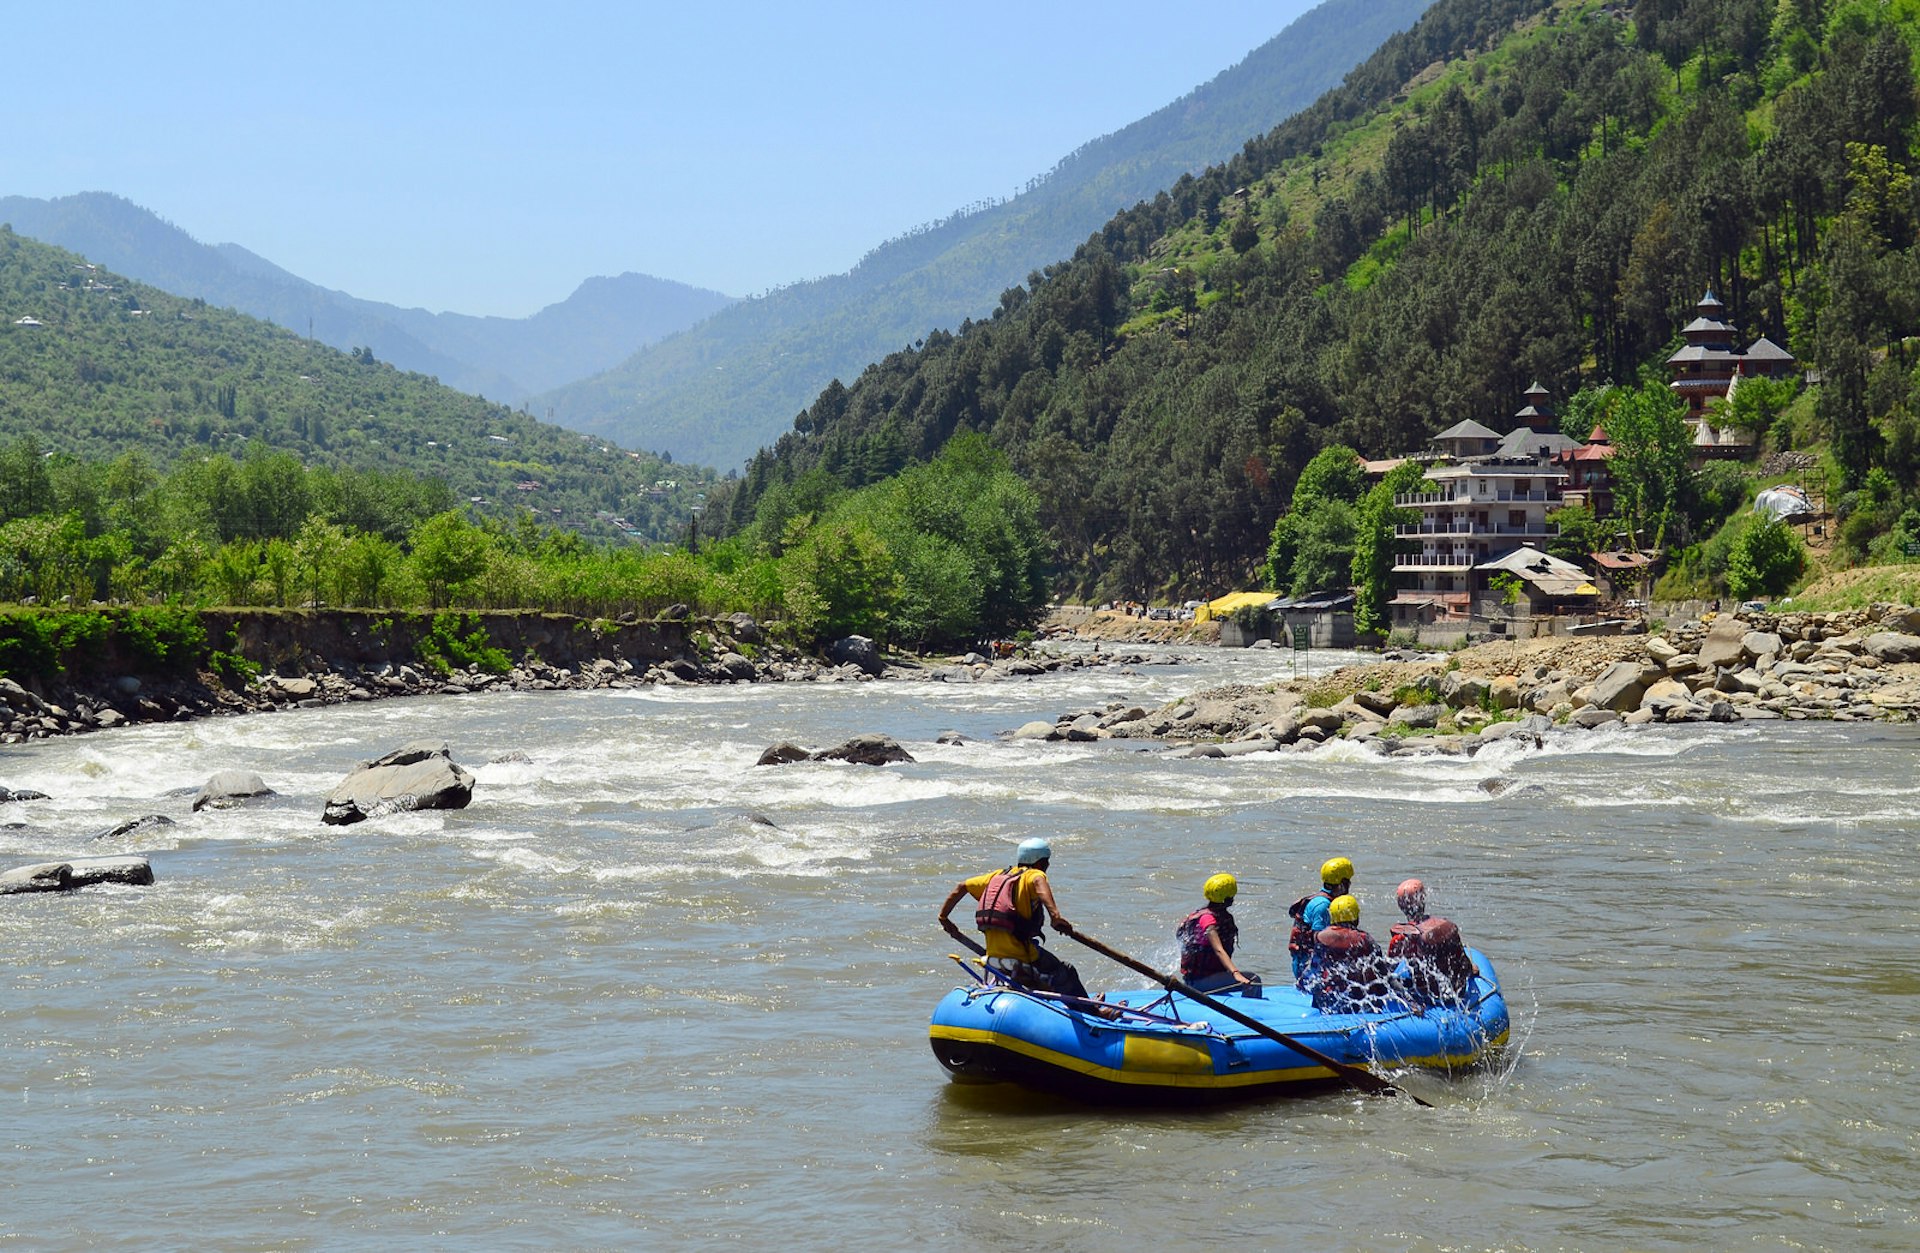 Whitewater rafters glide towards rapids in Himachal Pradesh